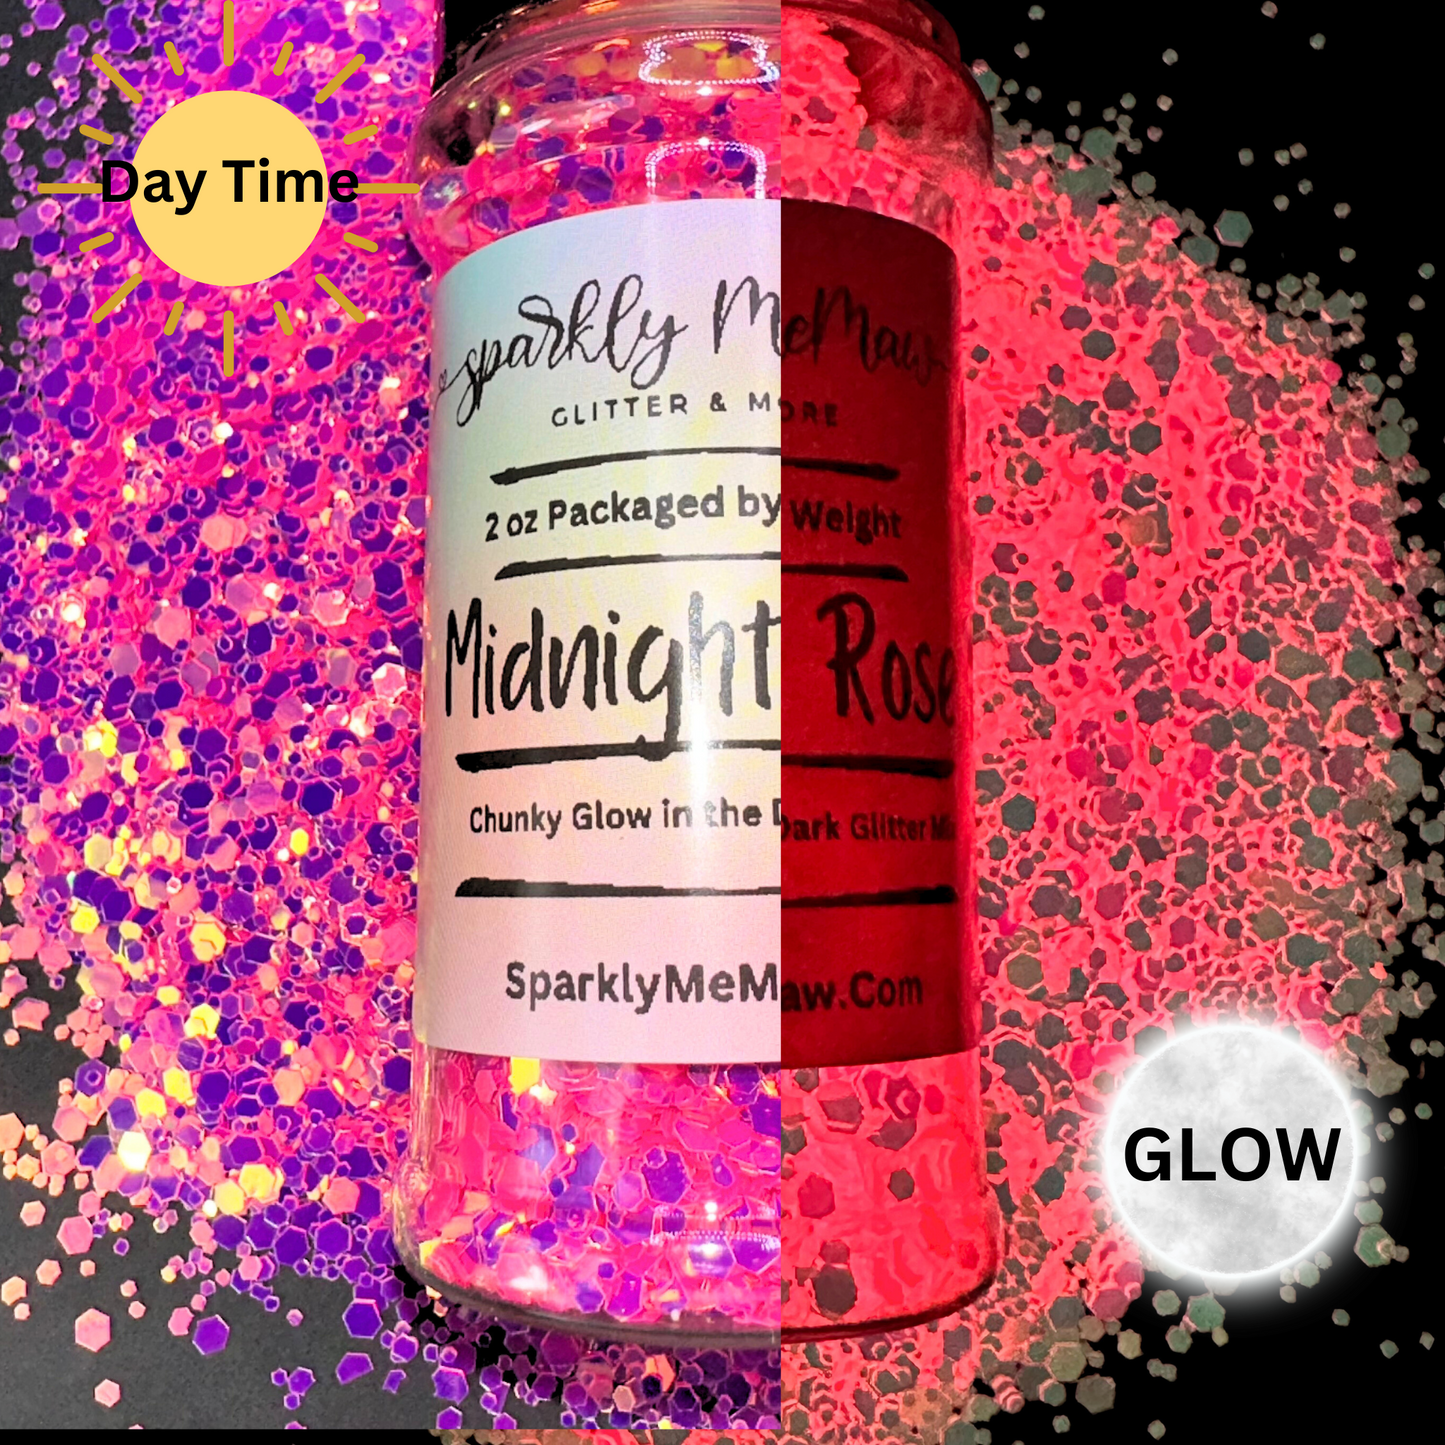 Midnight Rose Chunky Glow in the Dark Glitter Mix